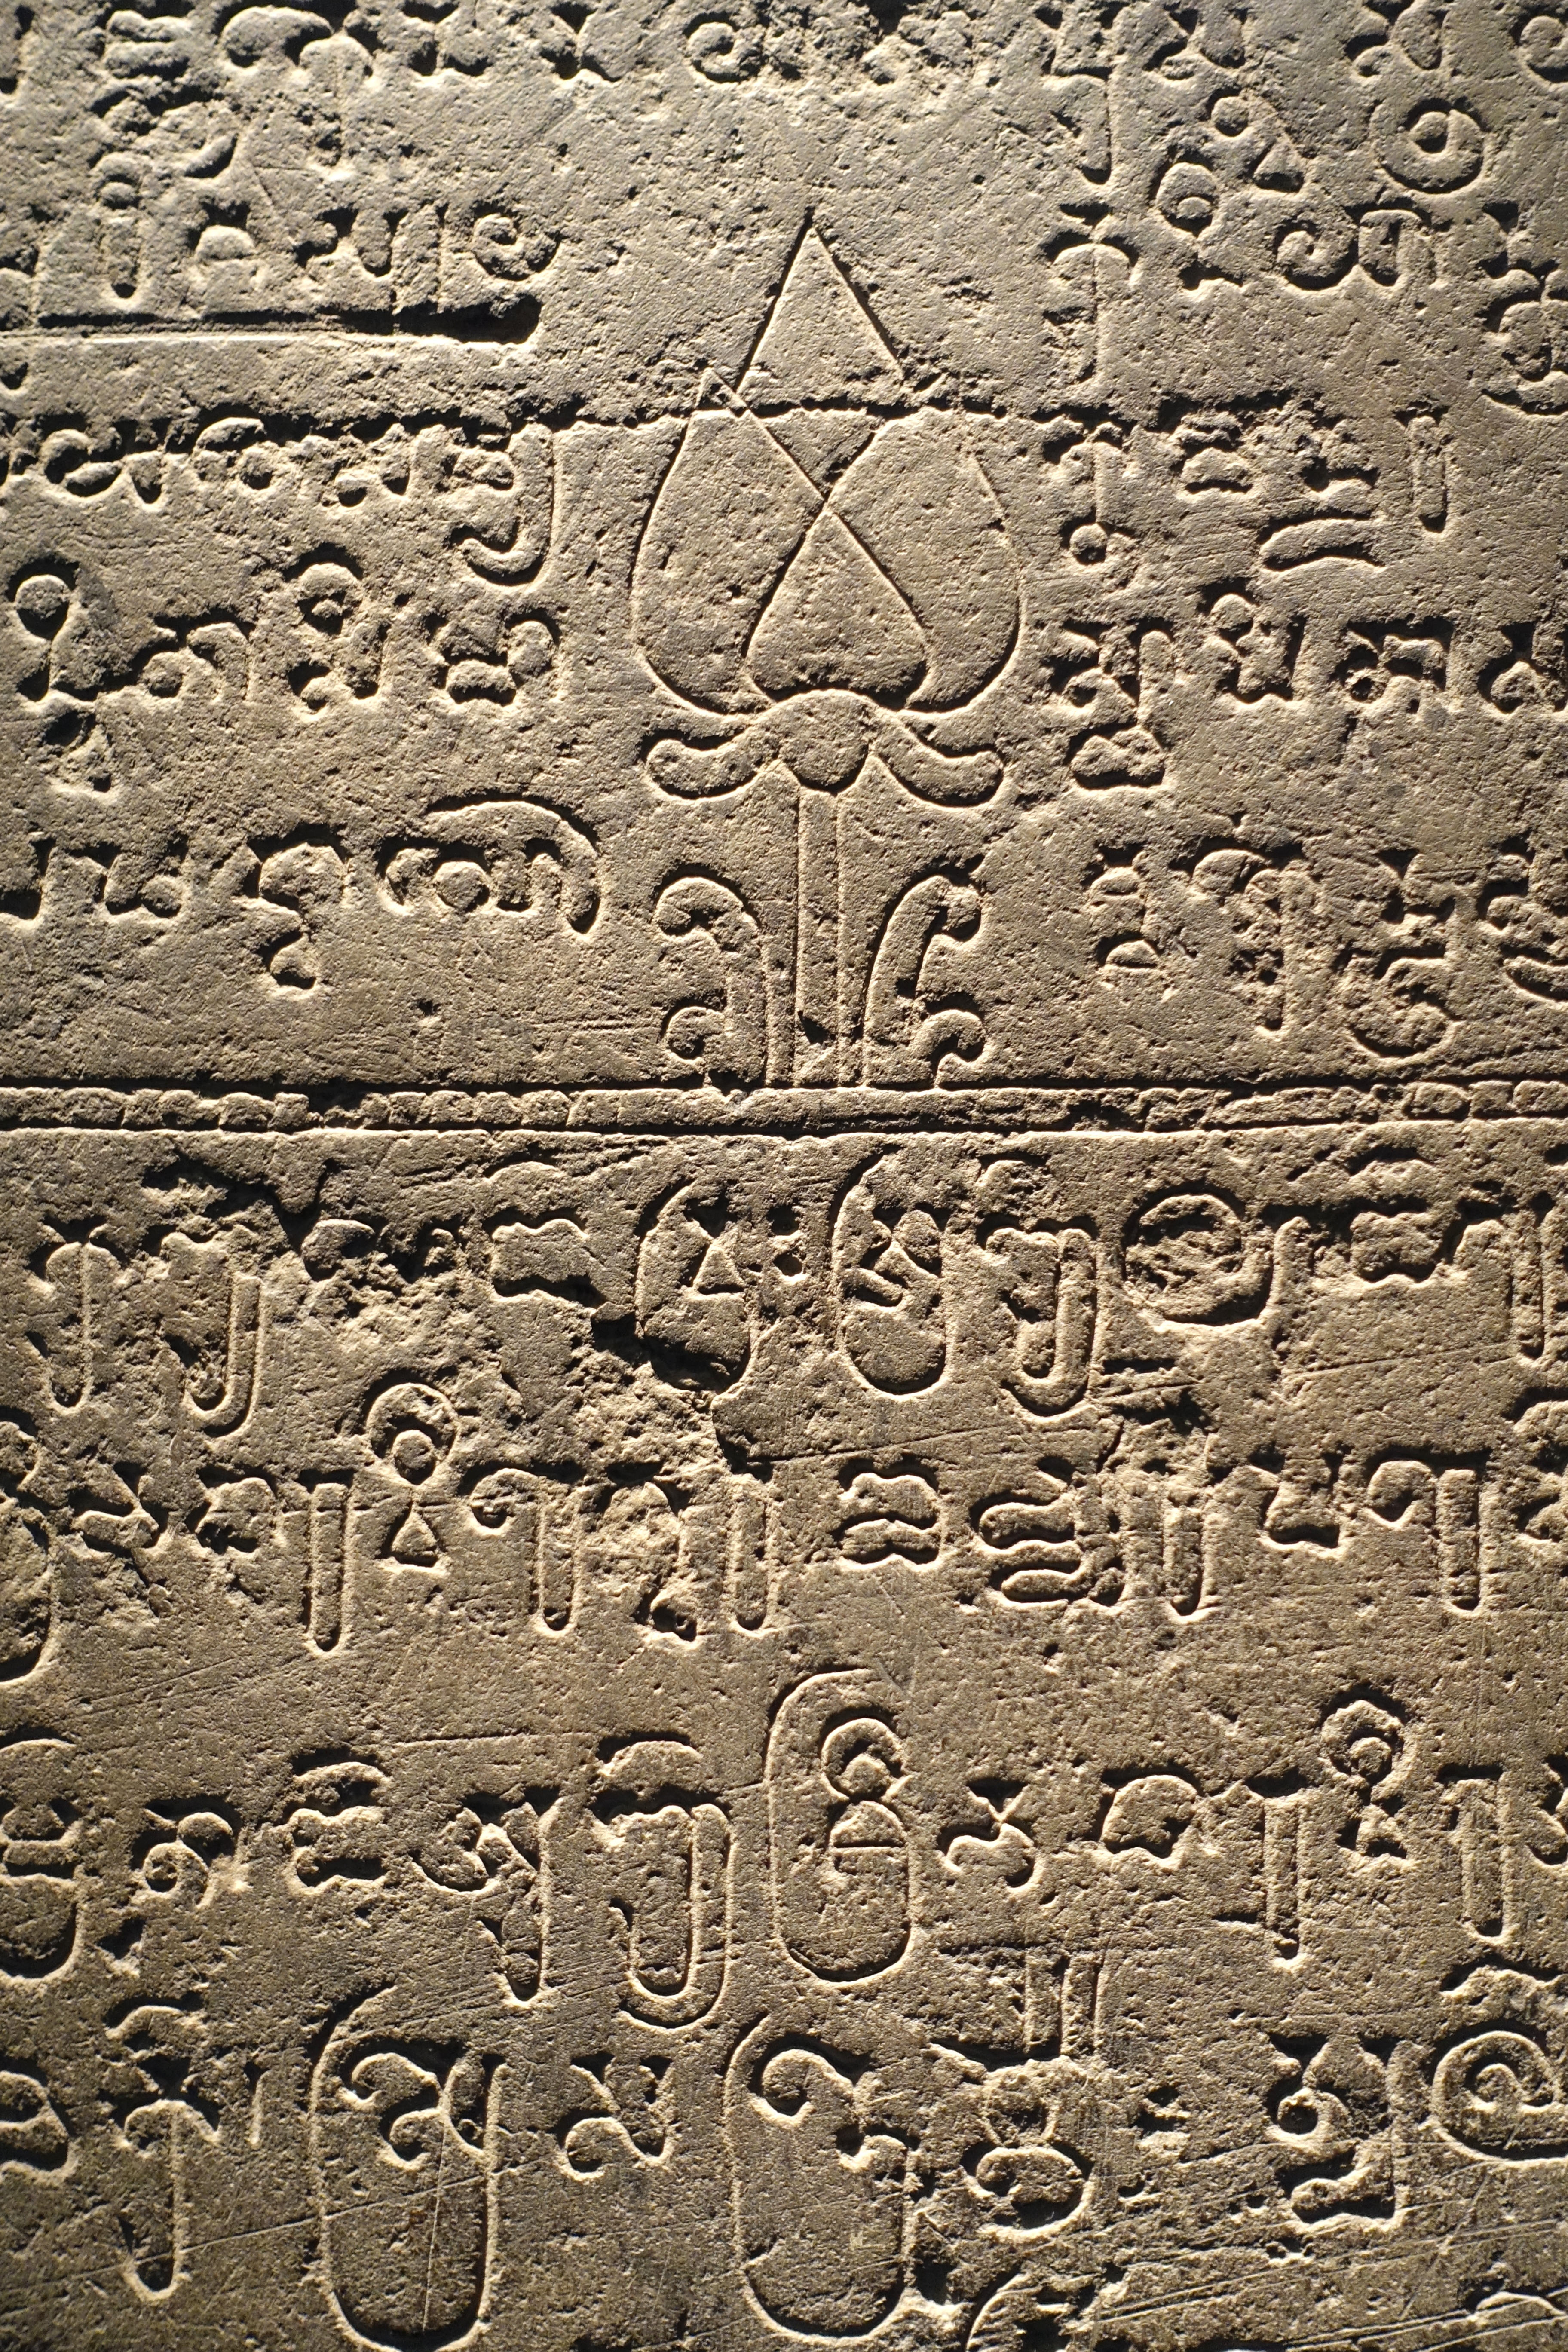 dating stele